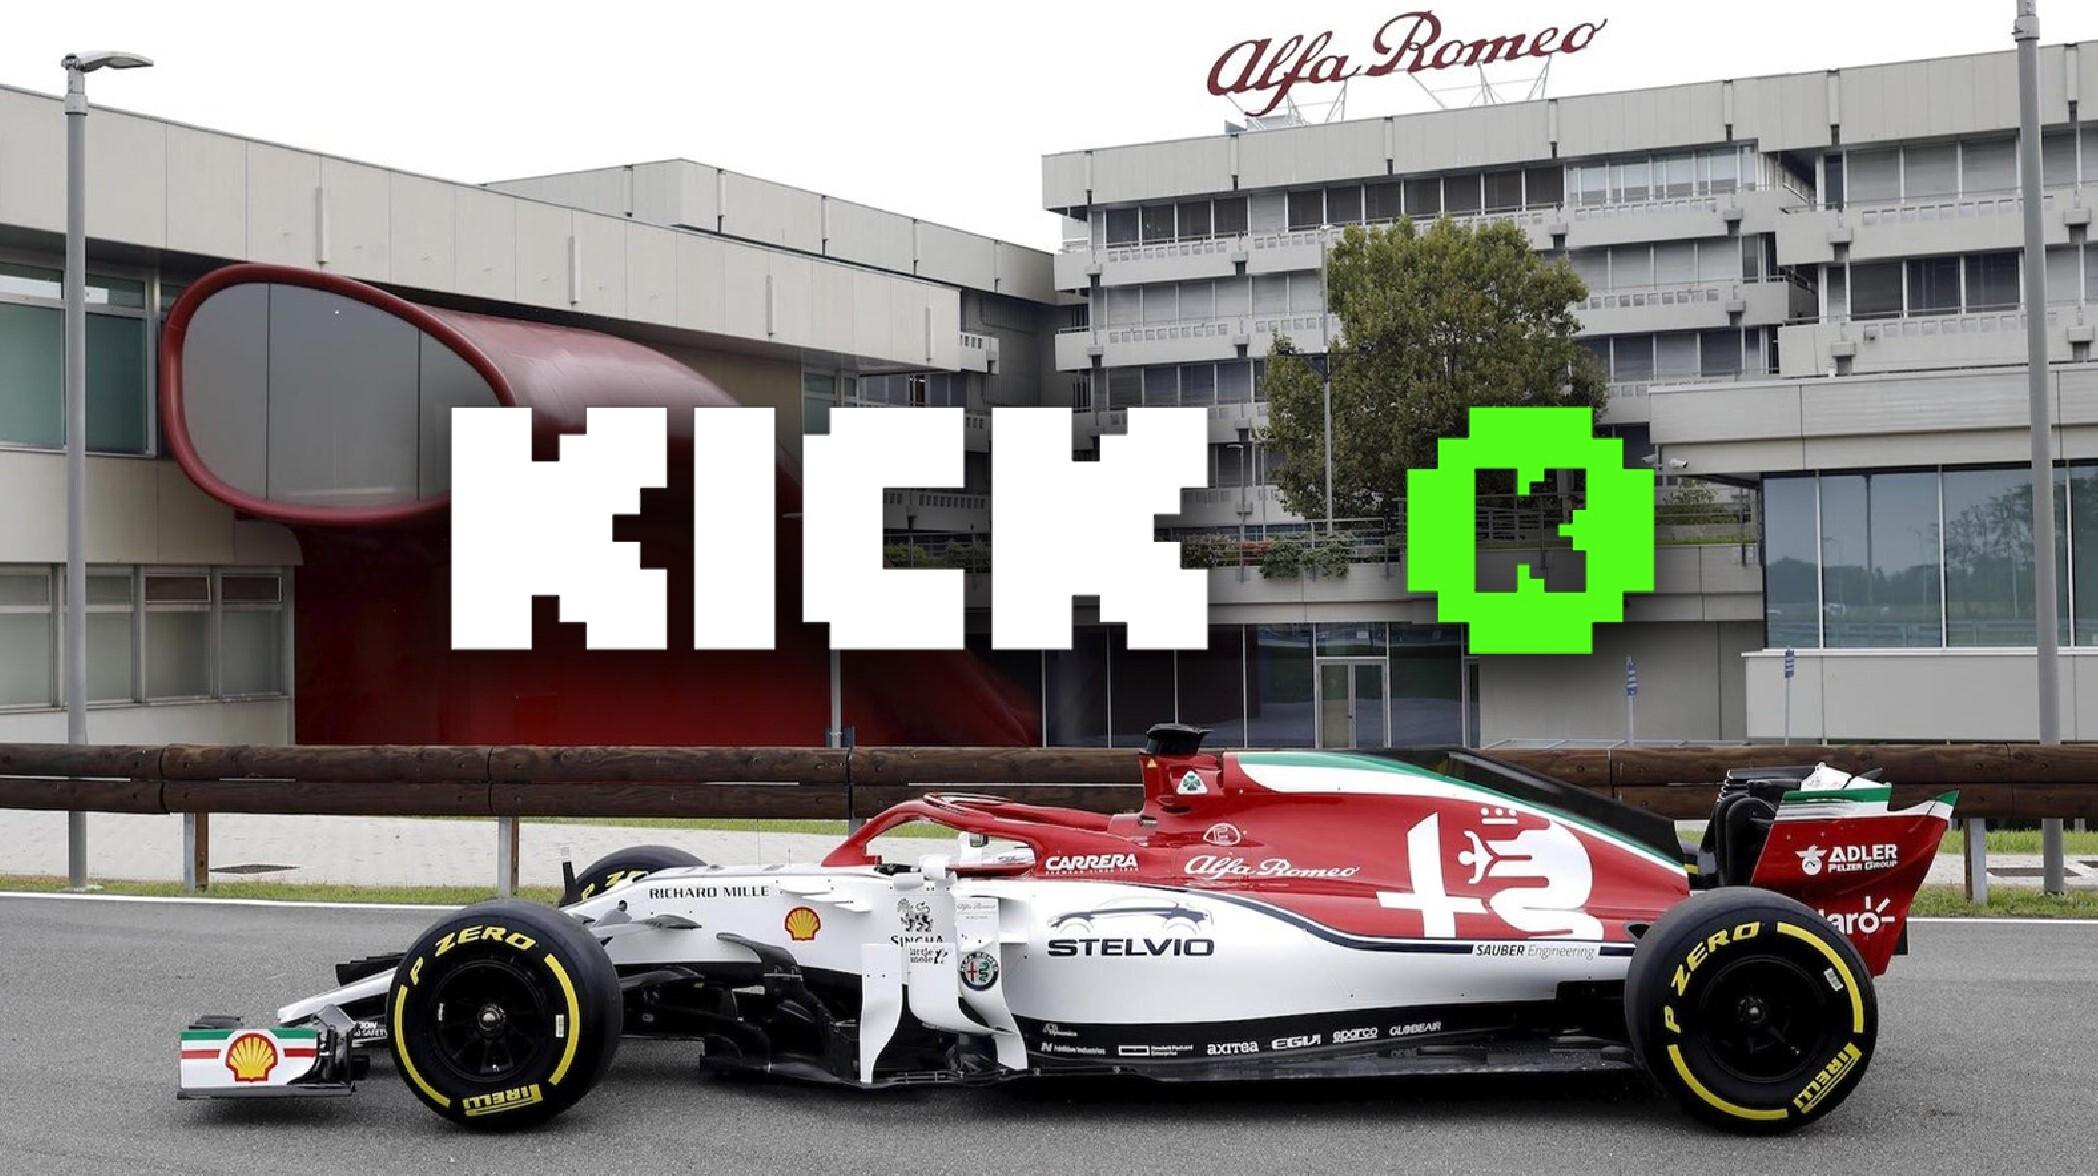 Alfe Romeo's f1 car with kick.com logo